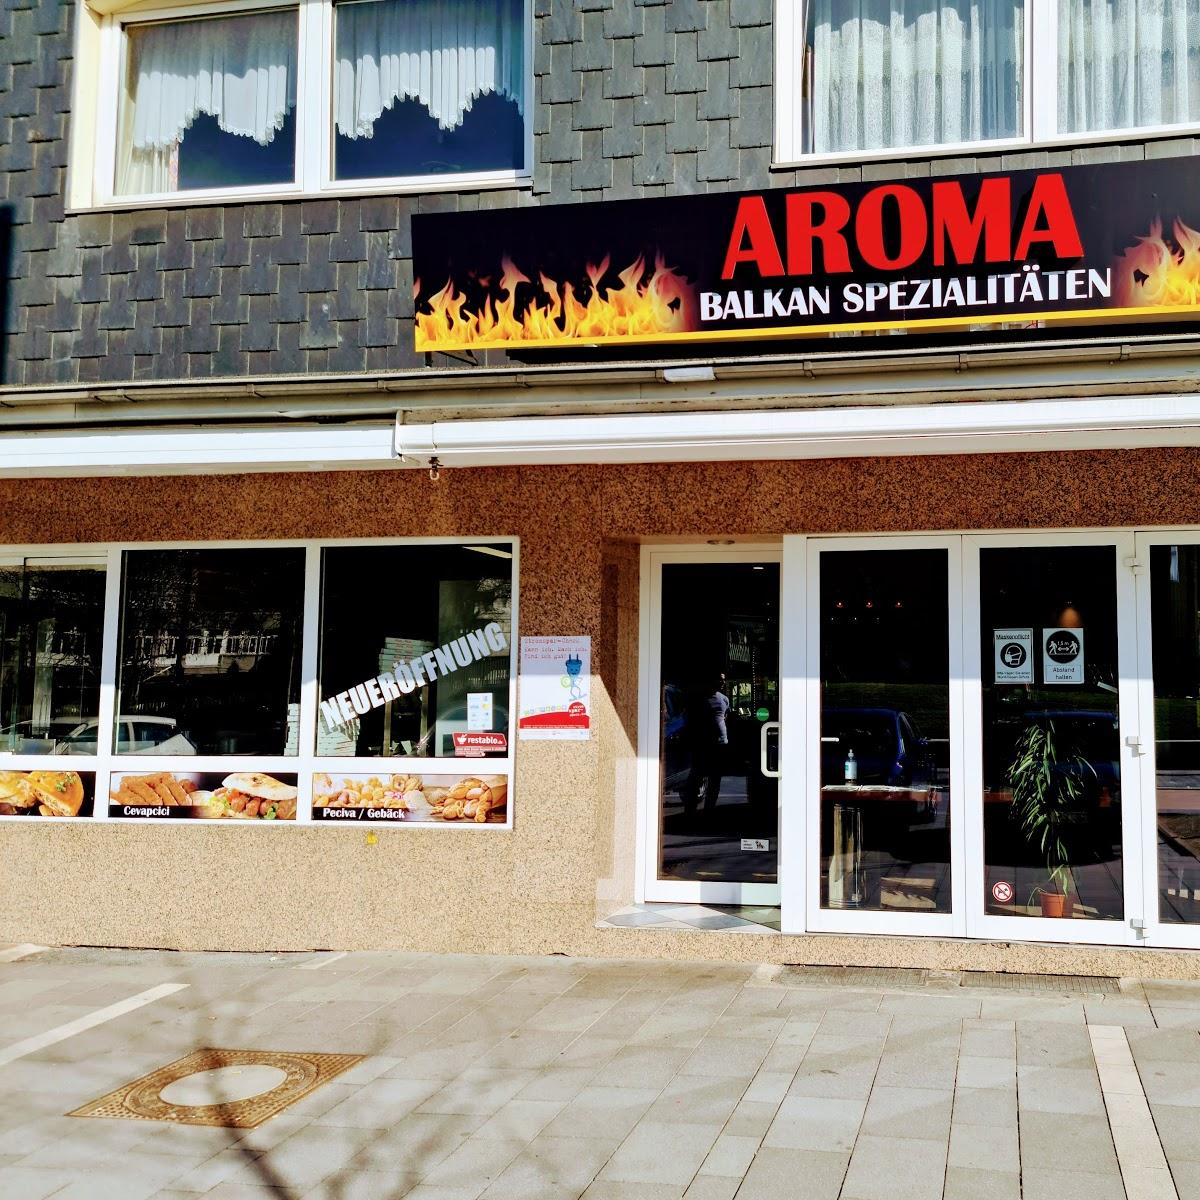 Restaurant "Aroma Balkan Spezialitäten" in Gelsenkirchen